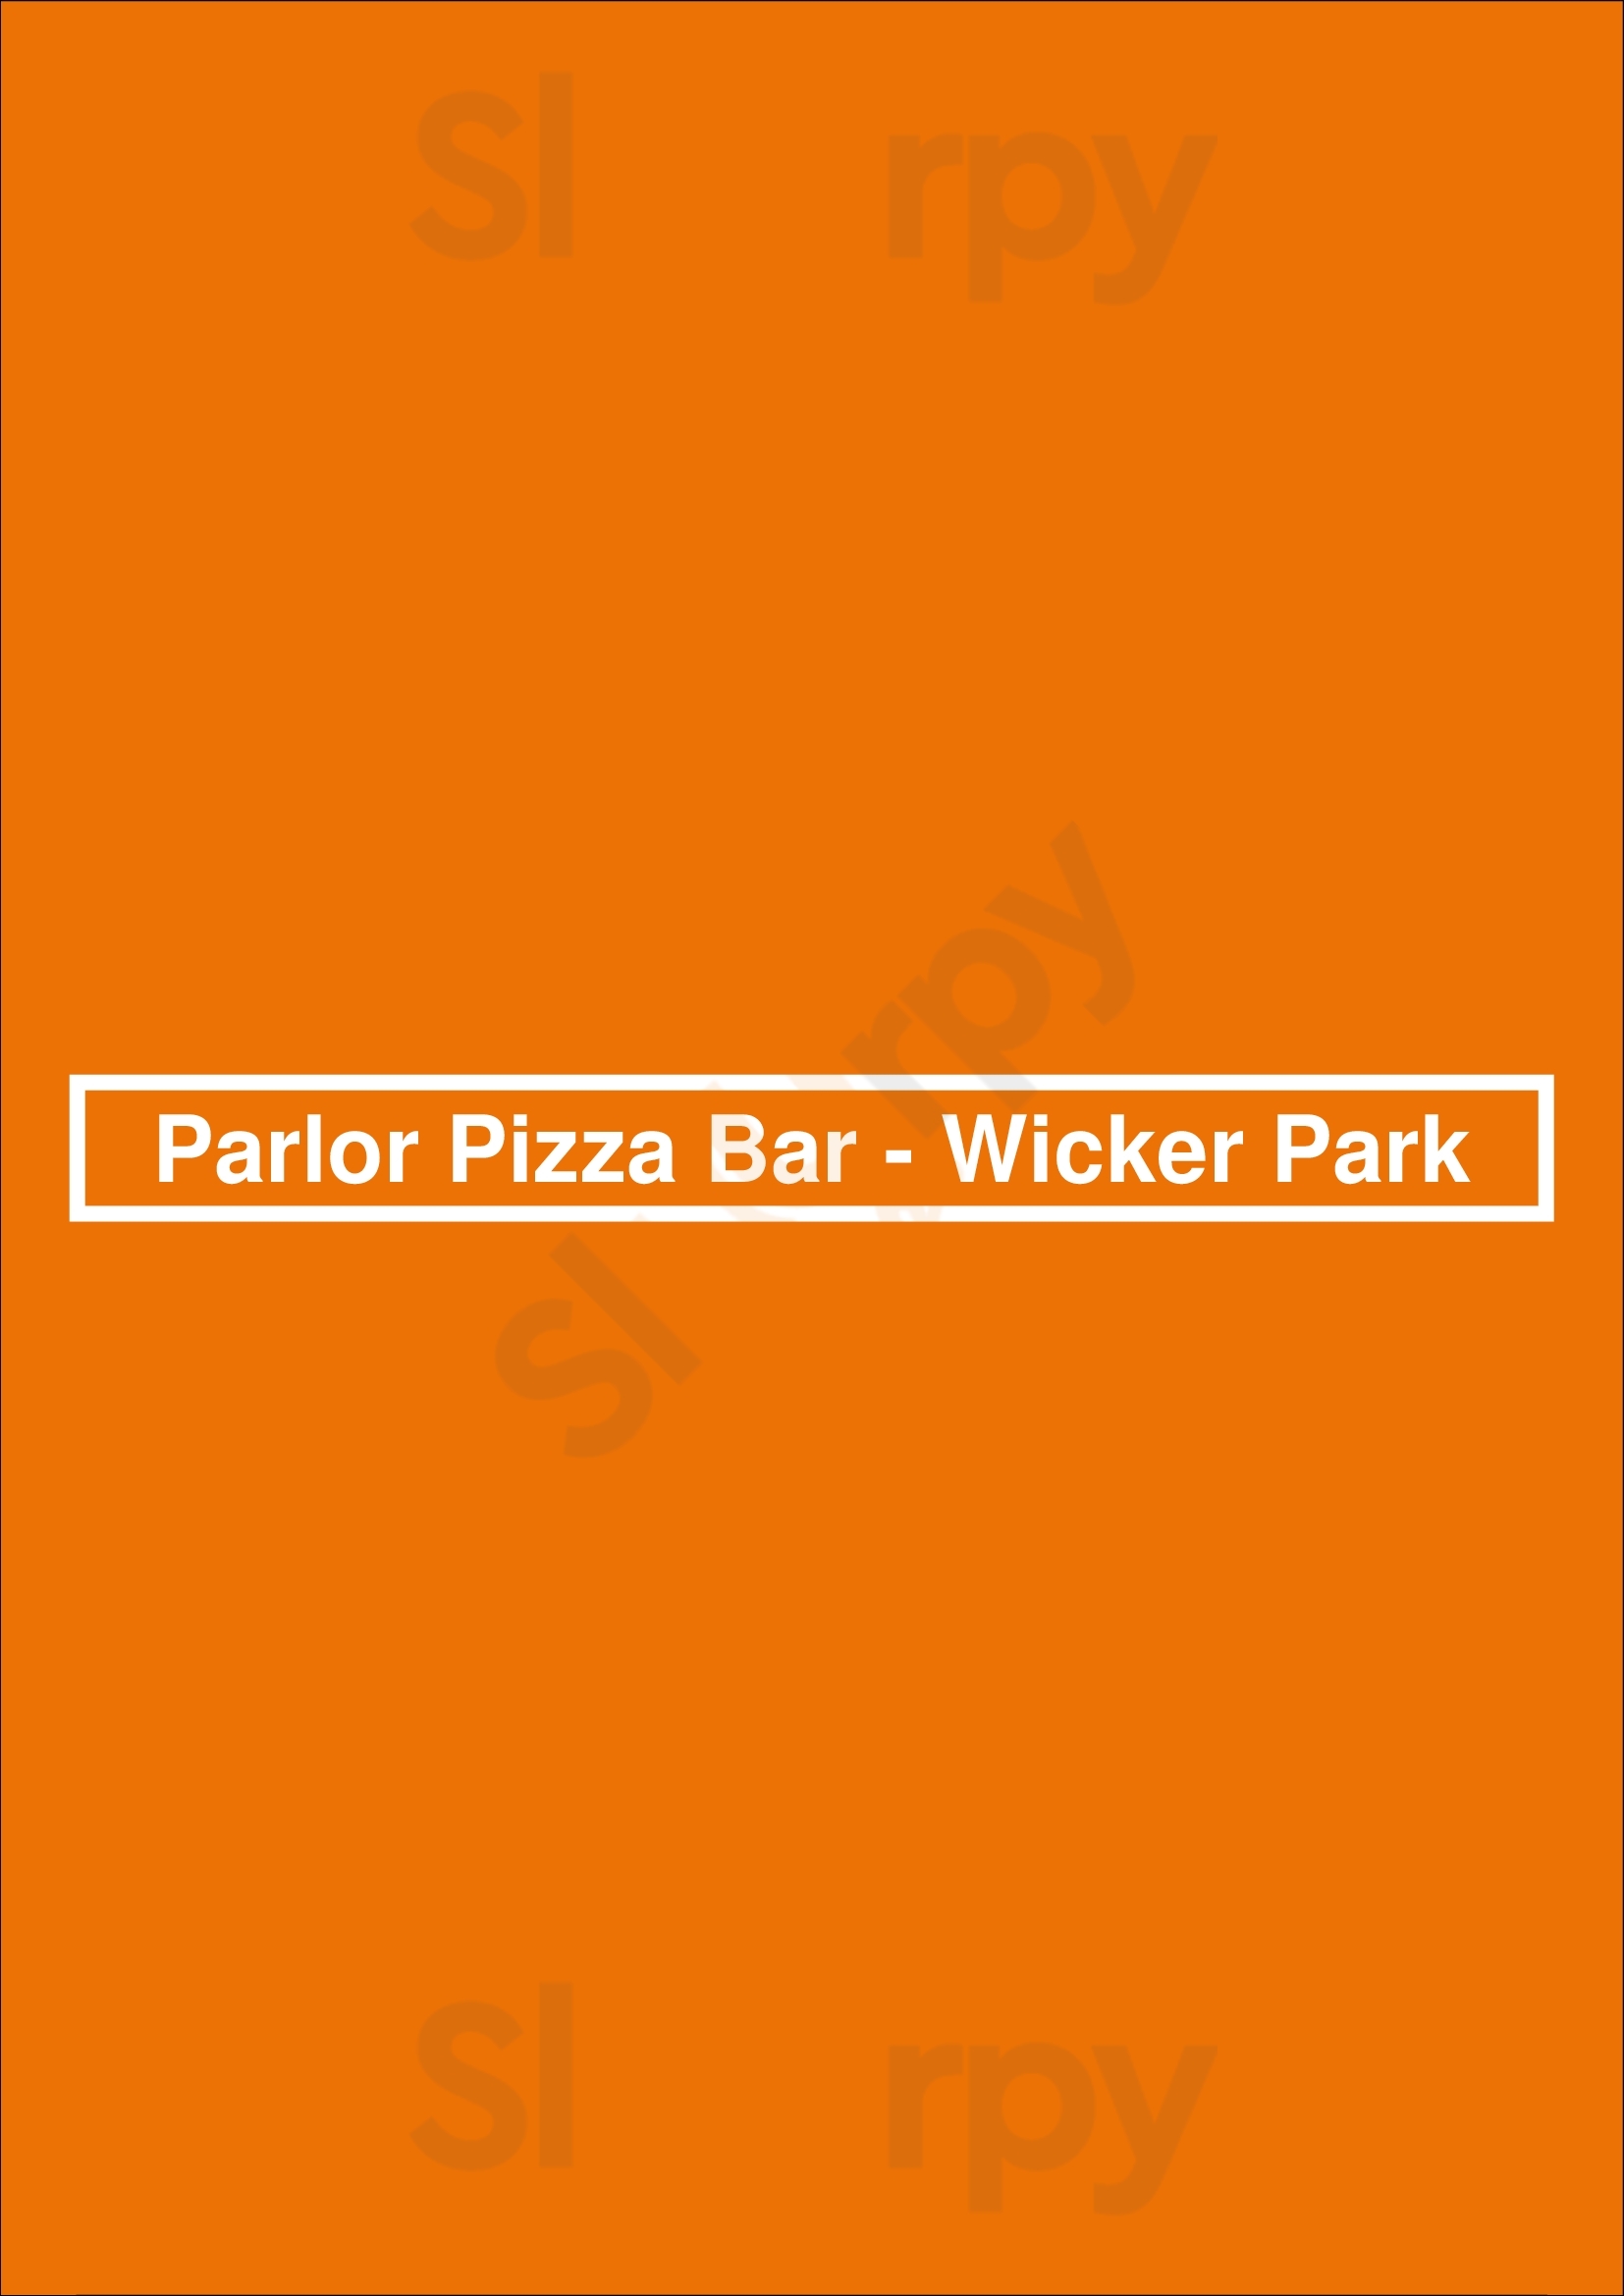 Parlor Pizza Bar - Wicker Park Chicago Menu - 1